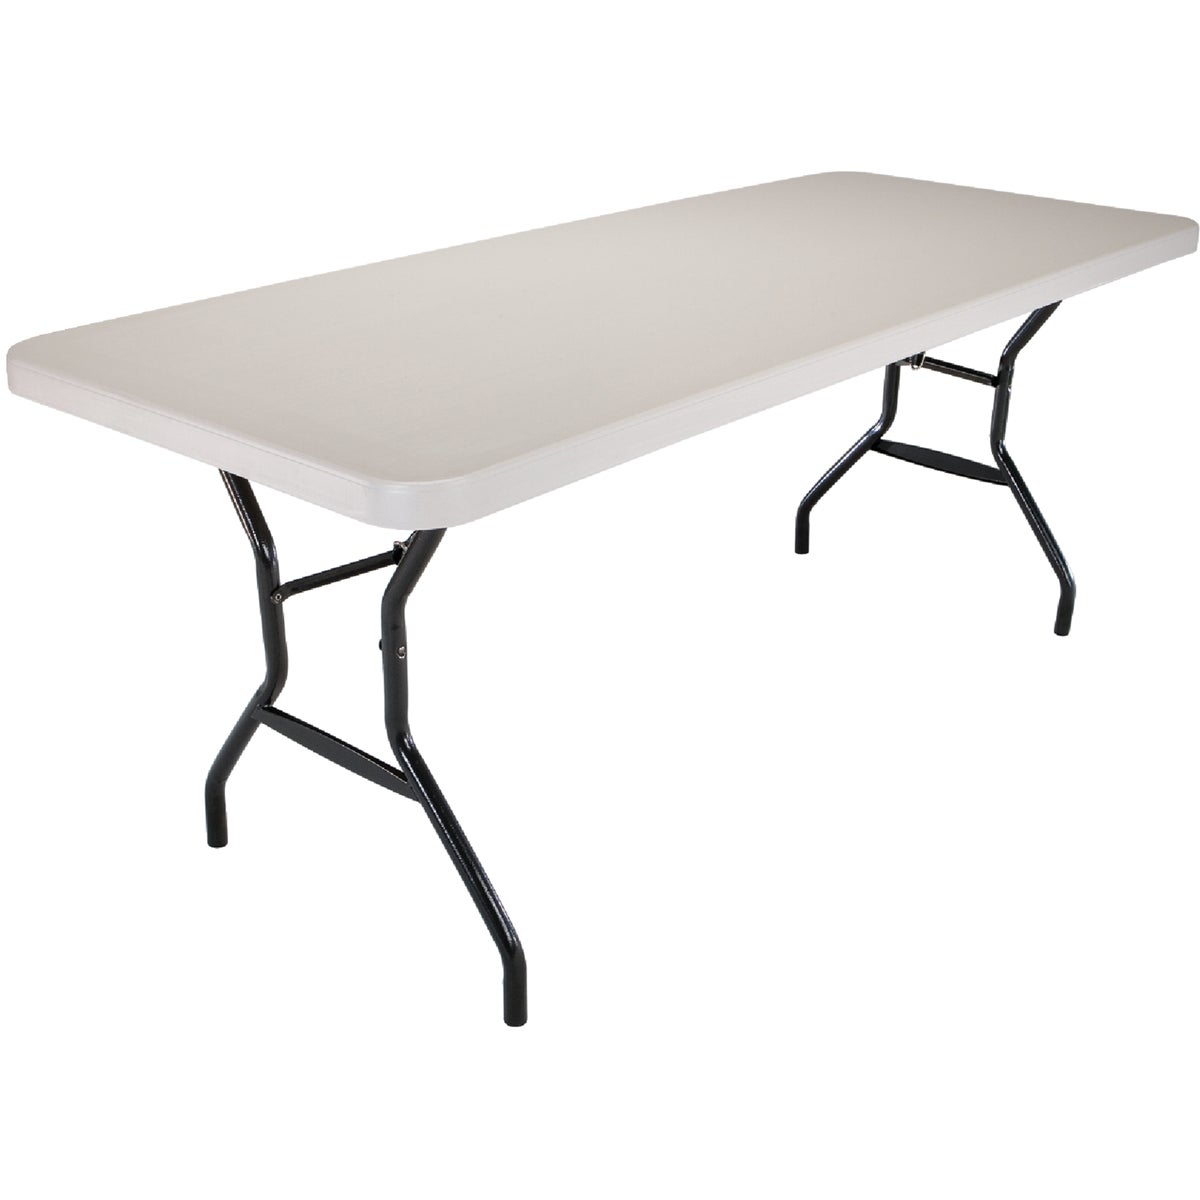 6′ WHITE FOLDING TABLE